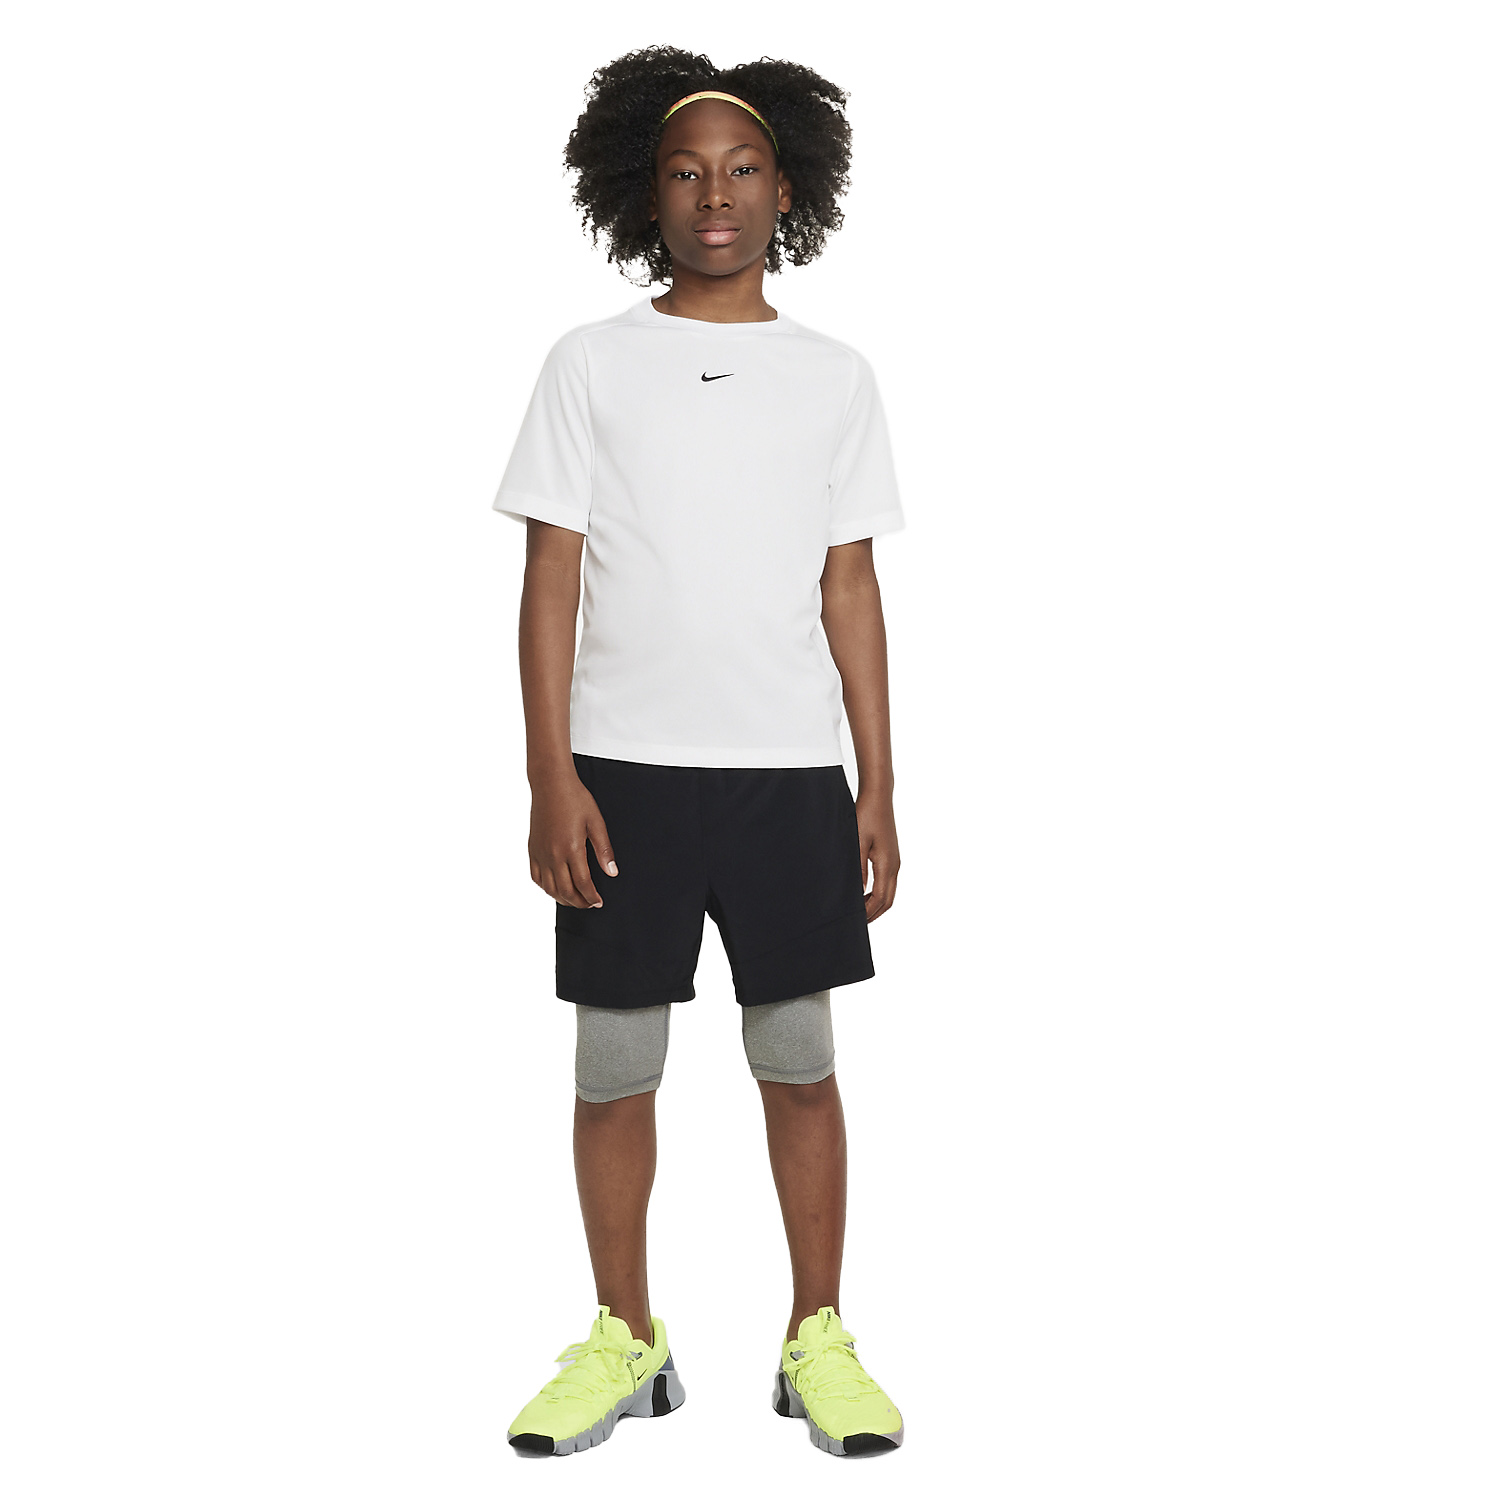 Nike Dri-FIT Multi T-Shirt Boy - White/Black